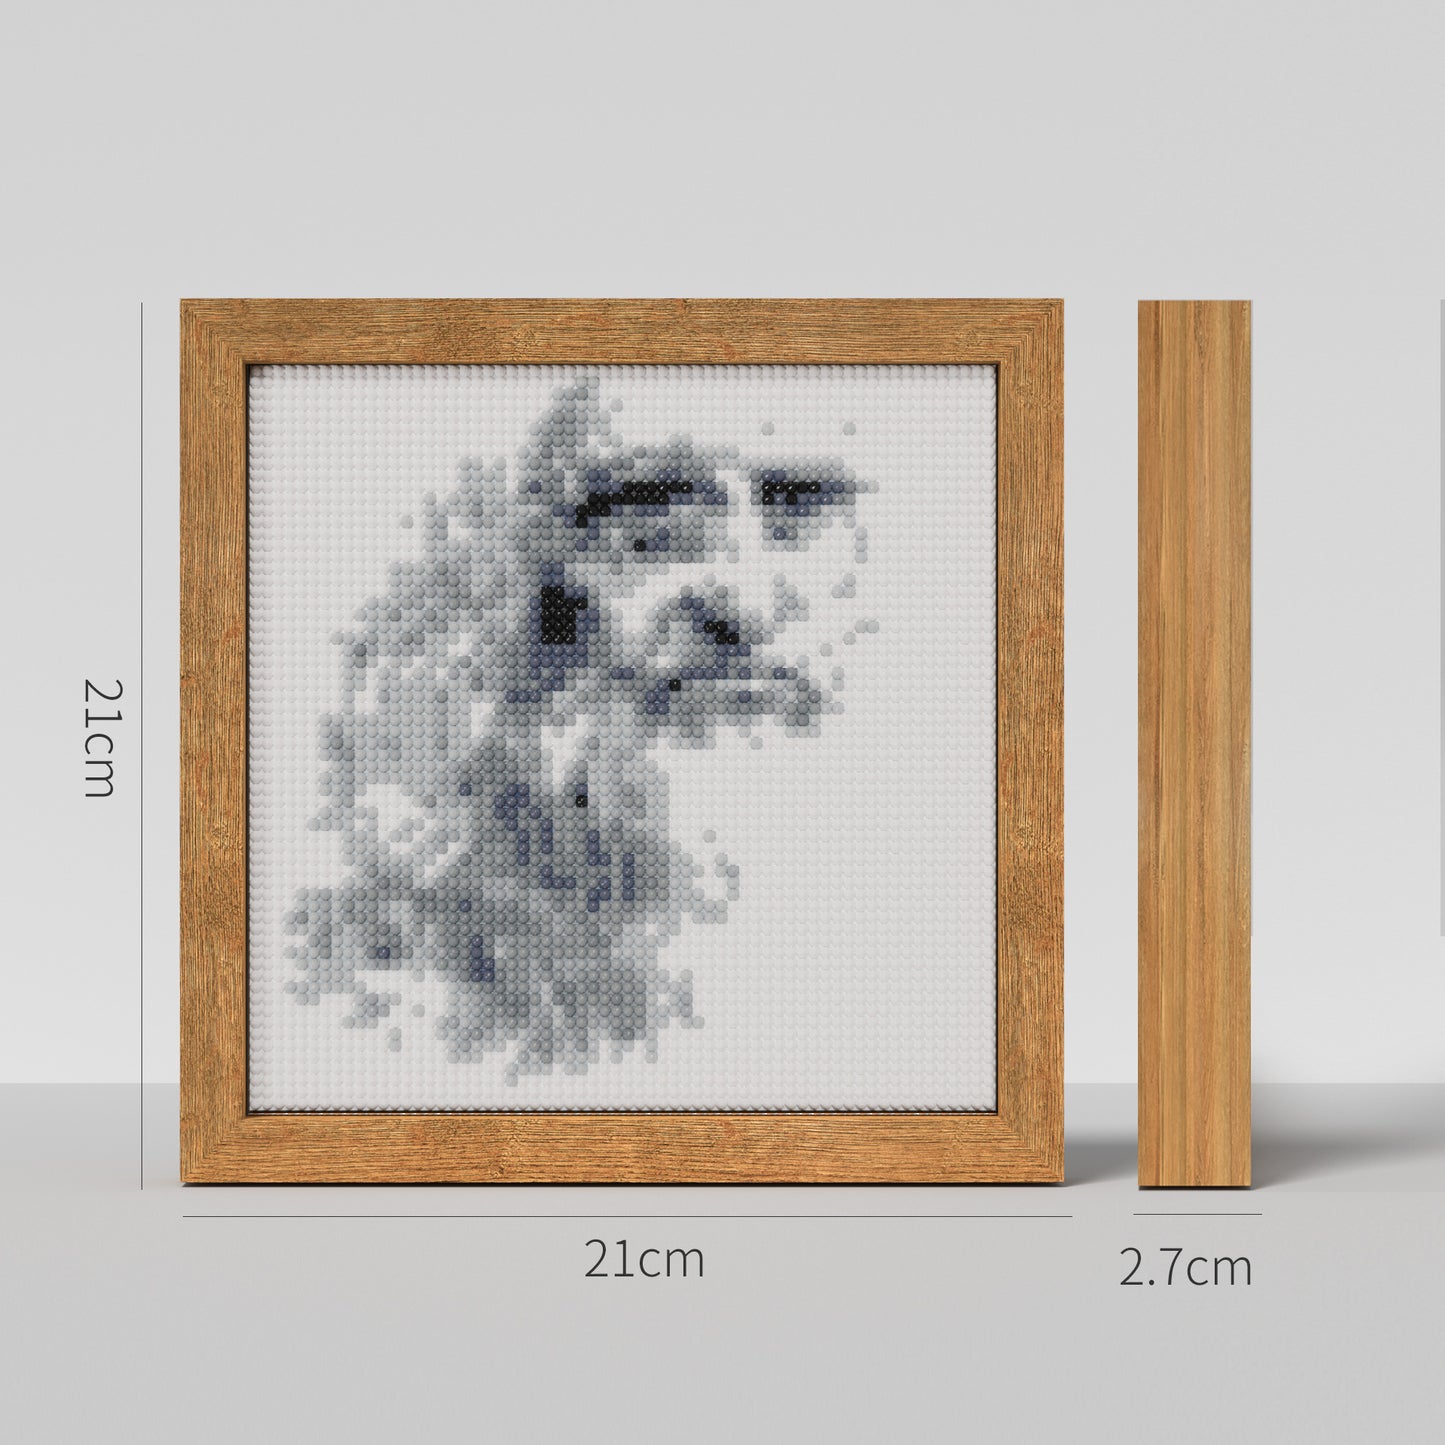 DIY 64x64Pixels "Self Portrait" Diamond Painting Kit - Recreate Leonardo da Vinci's Self Portrait with Diamond Art